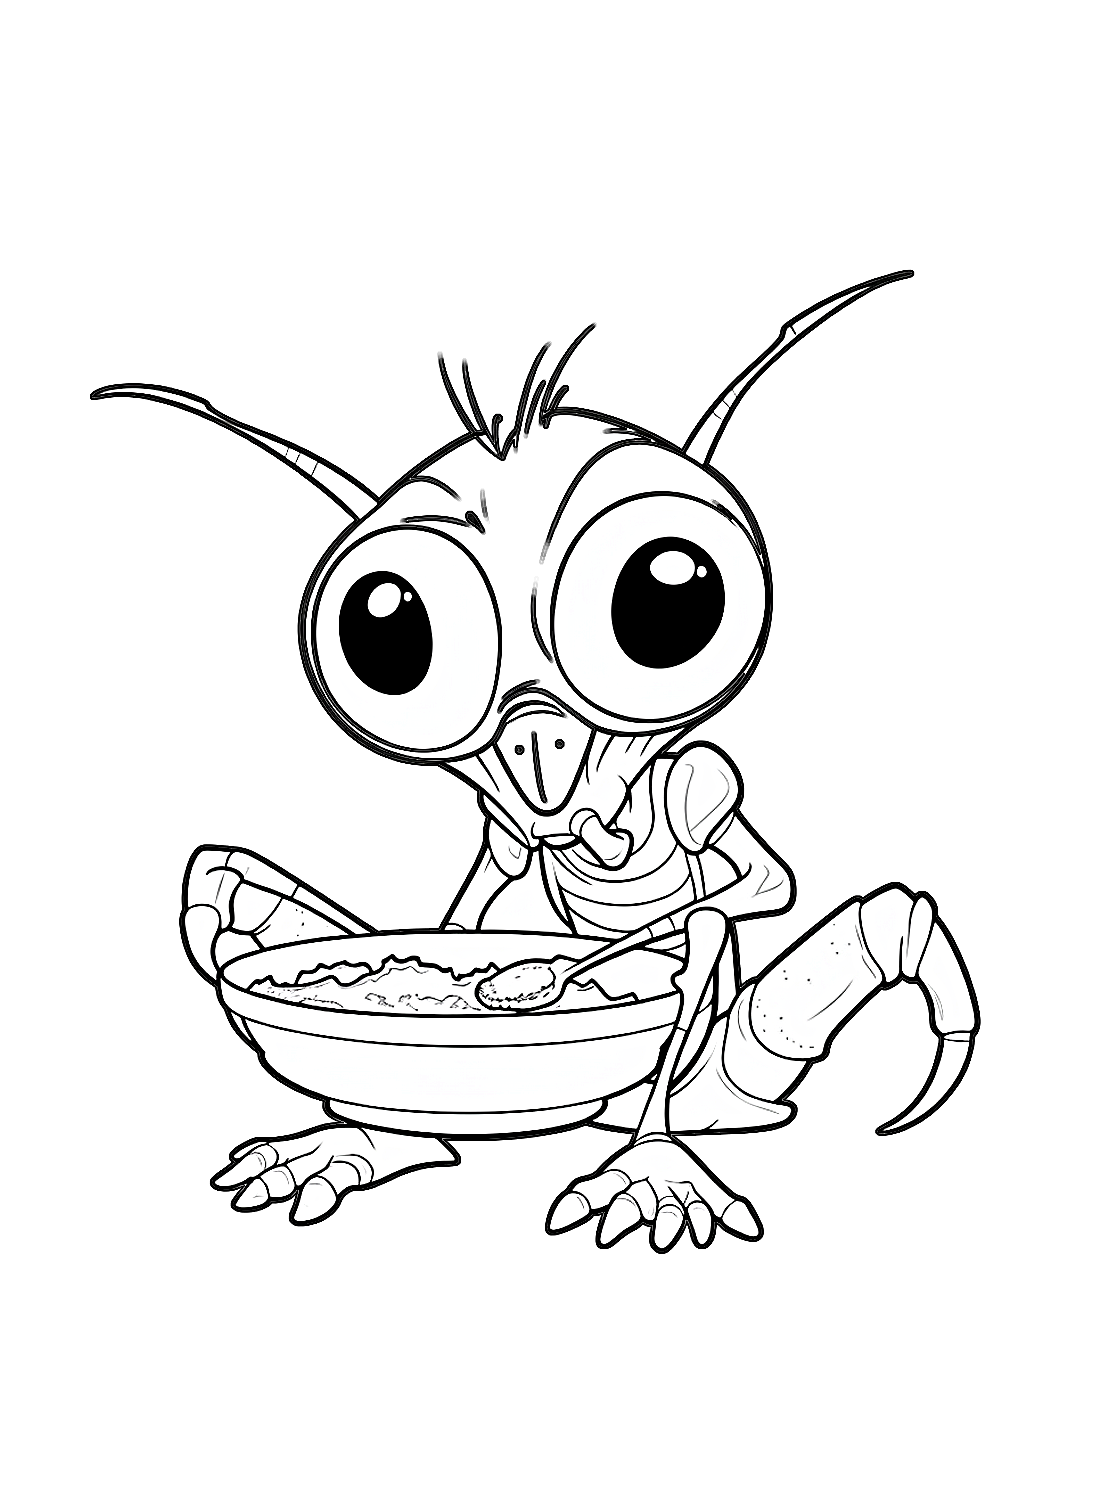 Een kakkerlak eet de soep van Kakkerlak